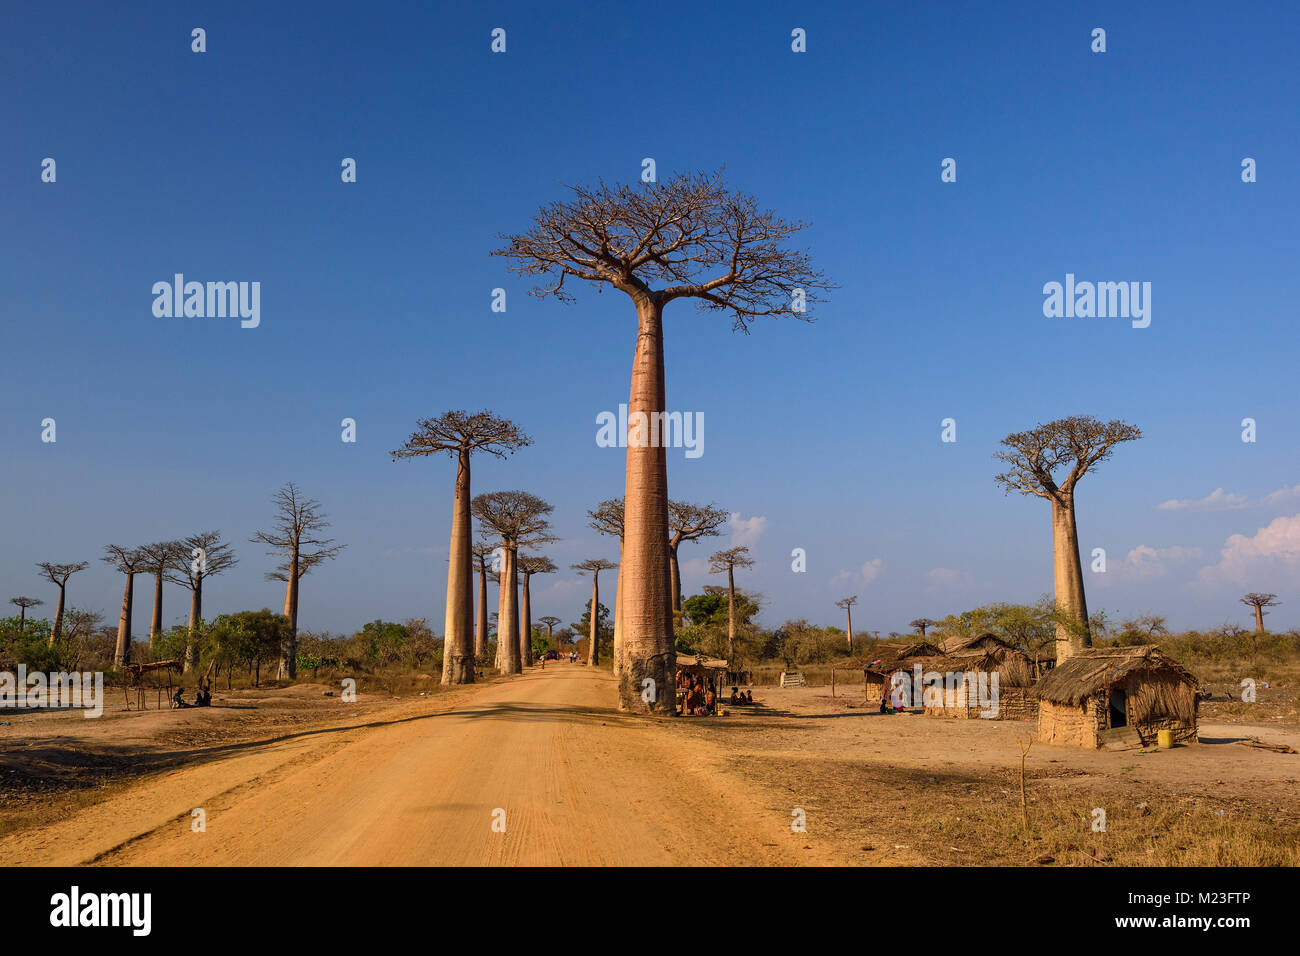 Baobab - Adansonia grandidieri, Madagascar west coast. Travel Madagascar. Holidays. Iconic tree Photo - Alamy